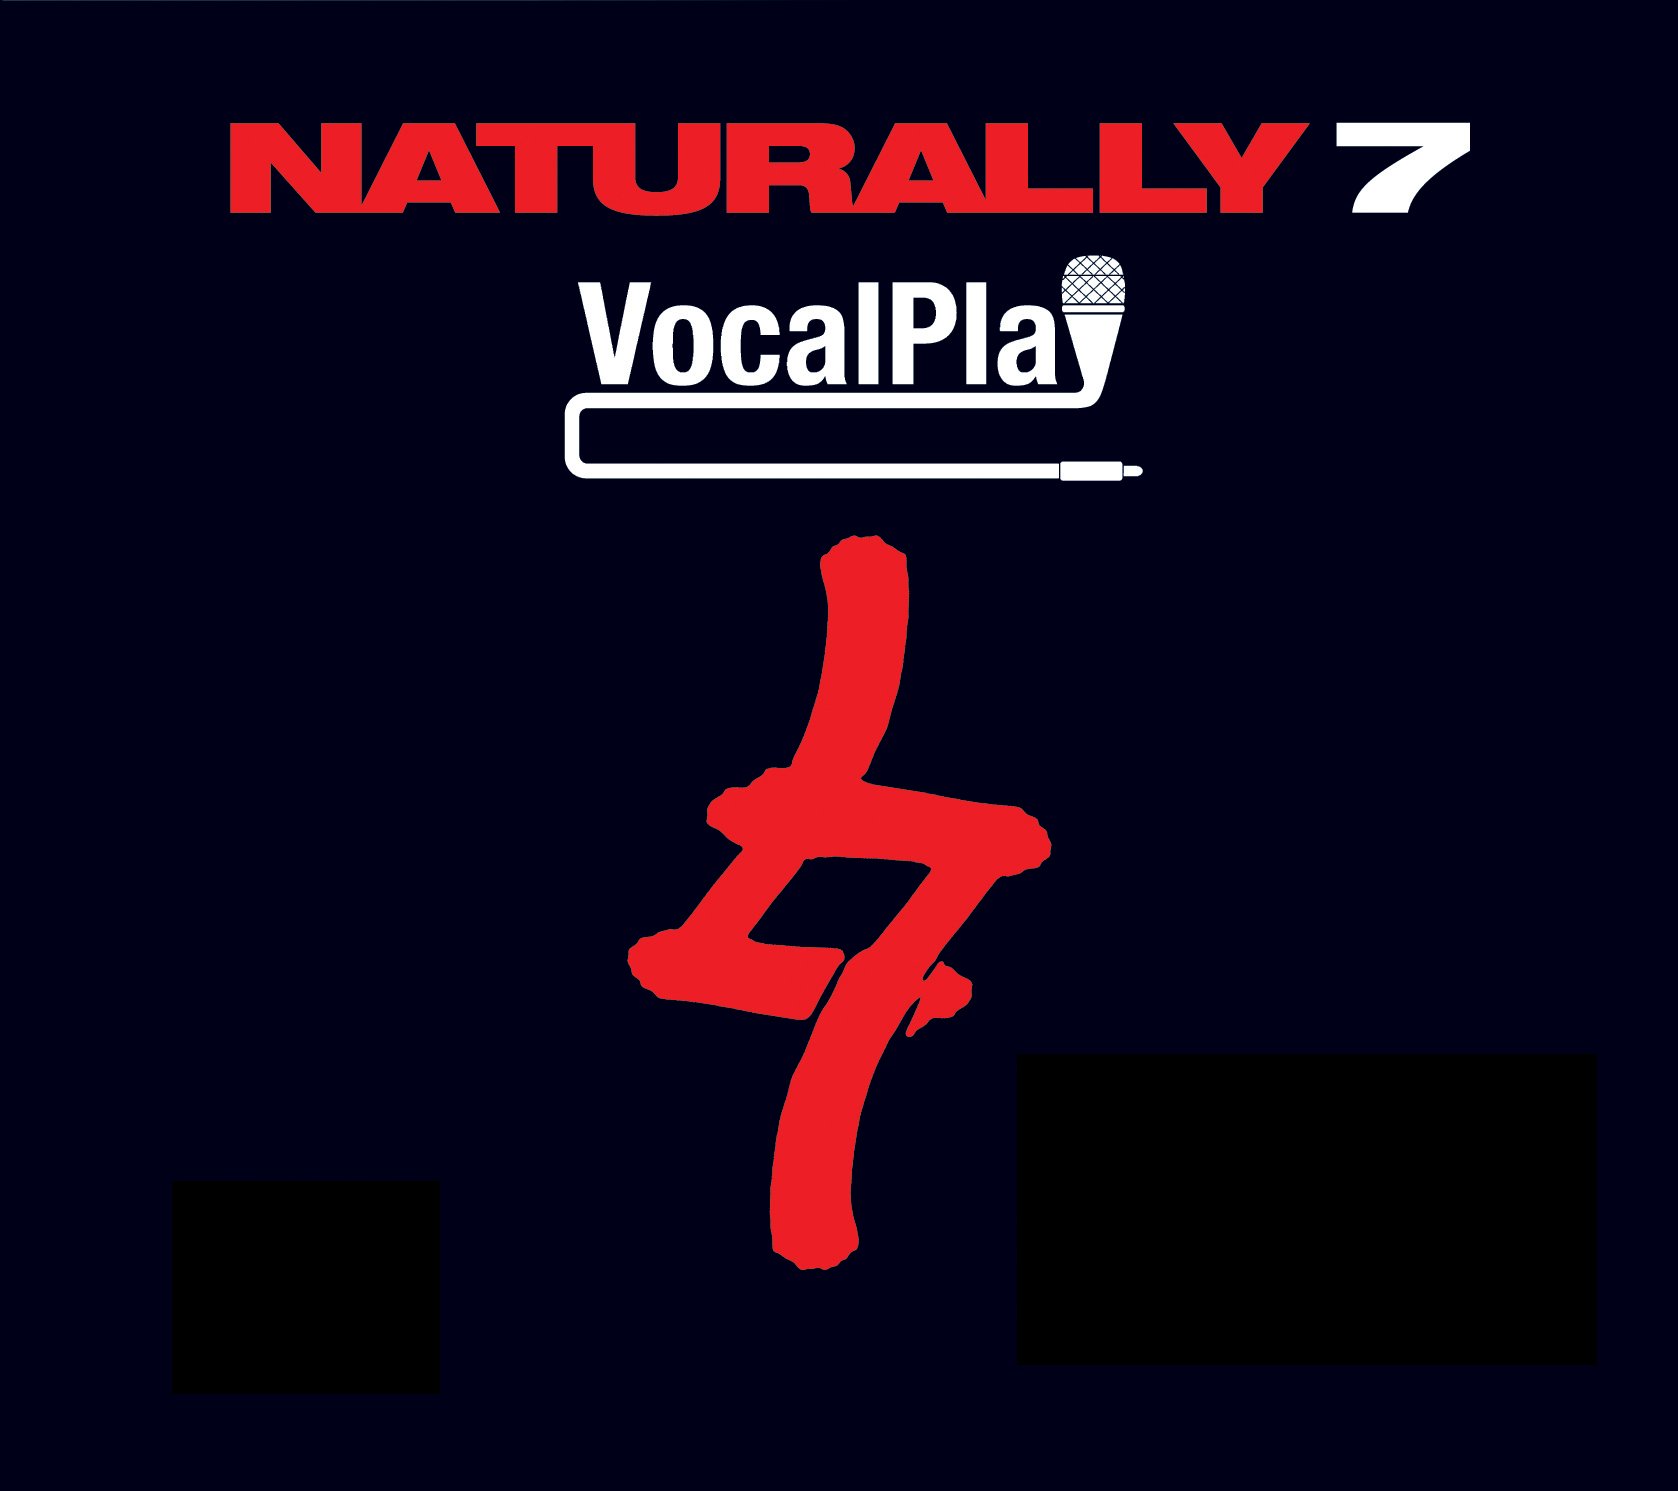 Vocalplay